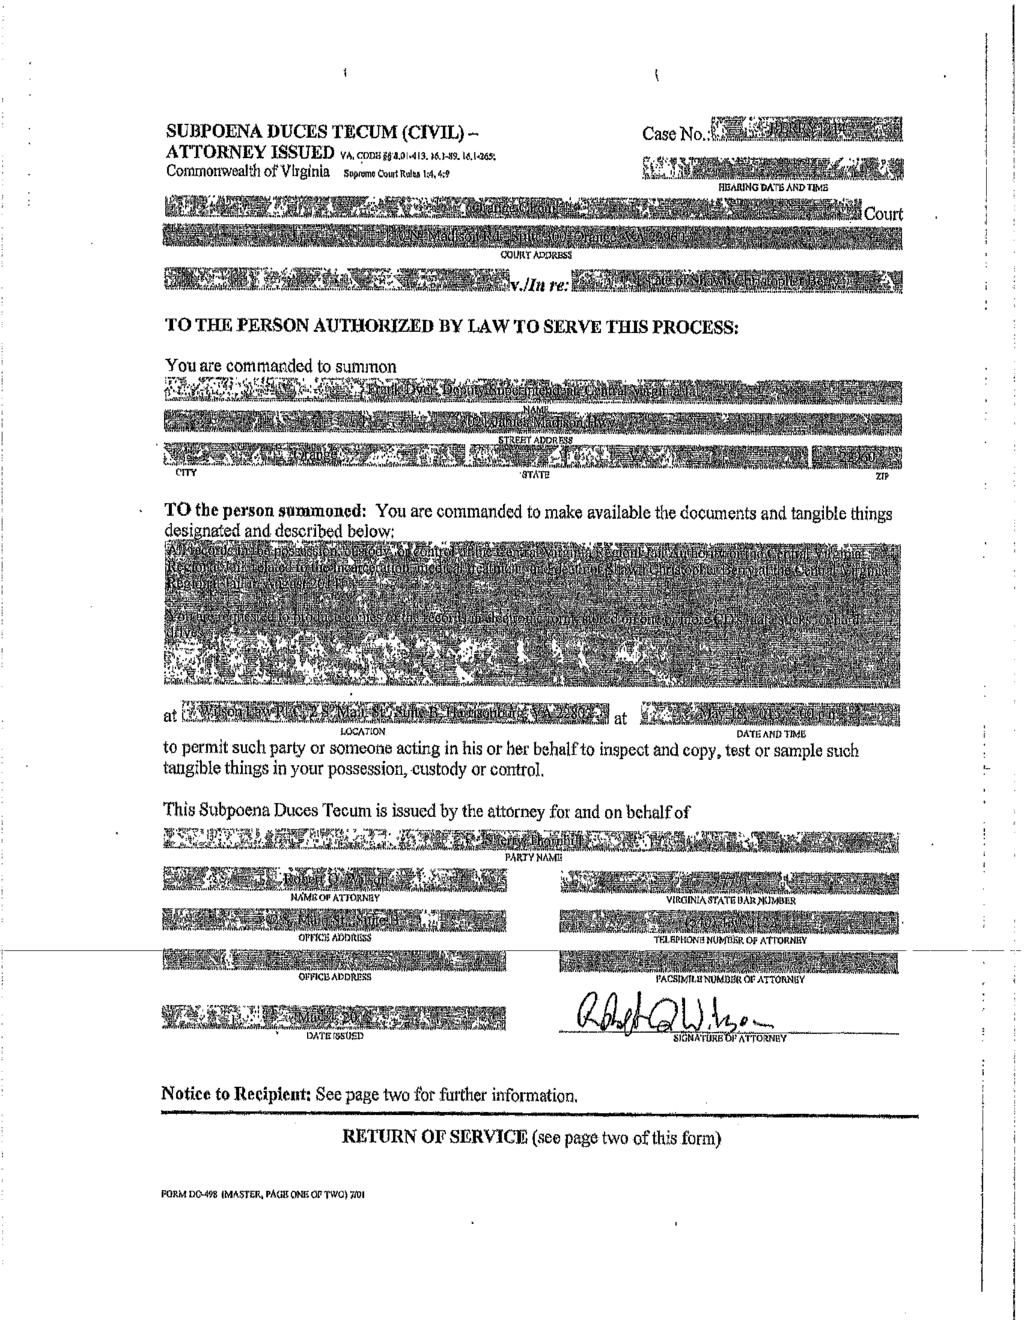 Case 3:15-cv-00024-GEC Document 18-2